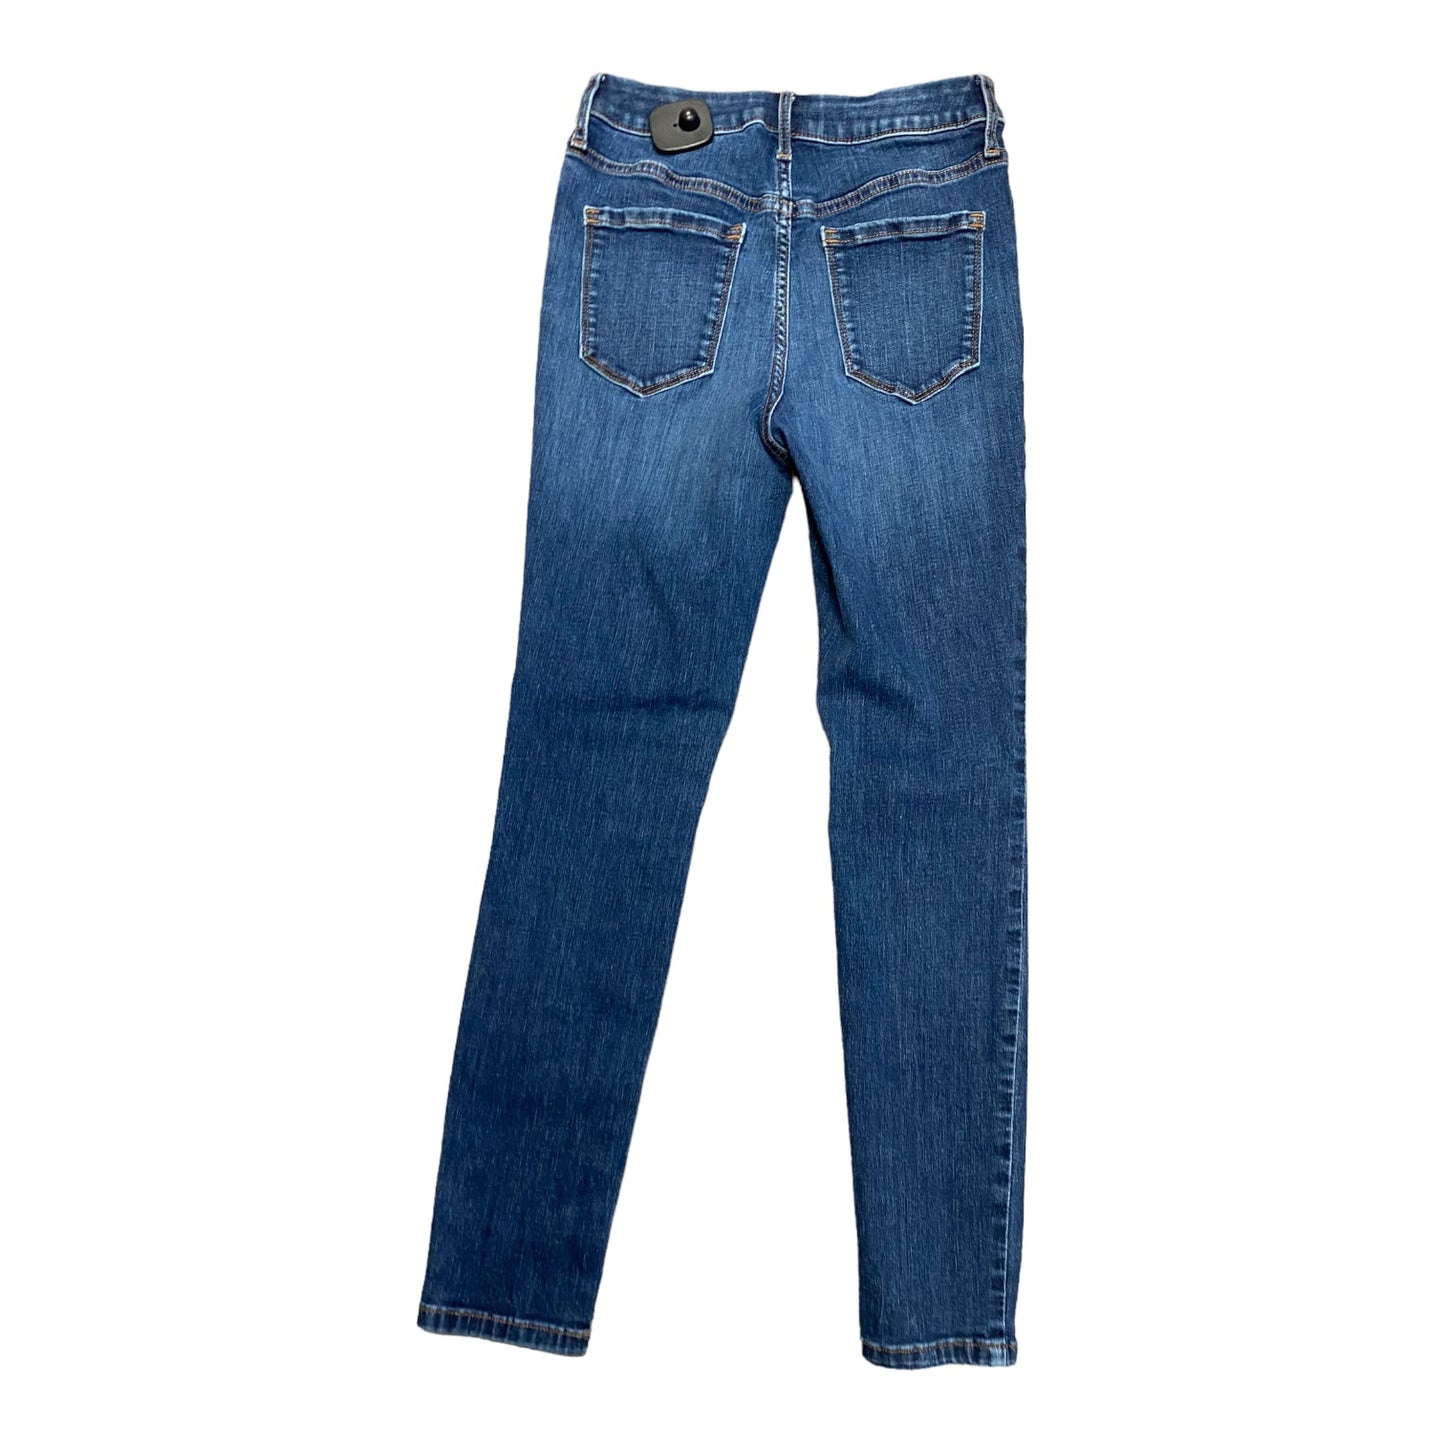 Jeans Skinny By Simply Vera  Size: 2